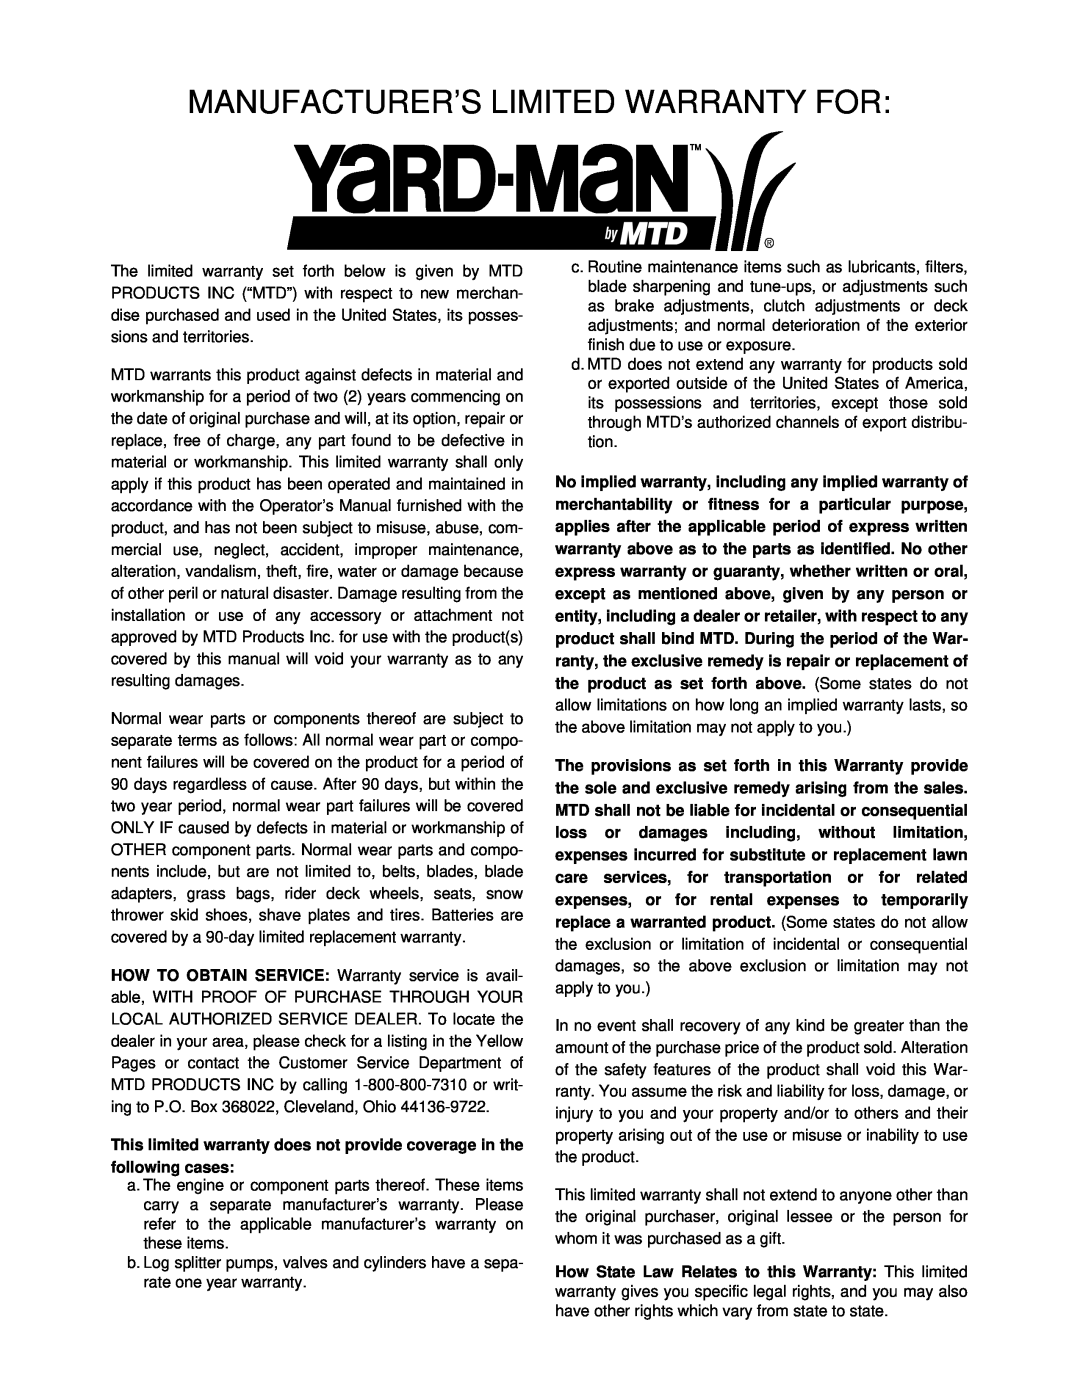 Yard-Man 589 manual Manufacturer’S Limited Warranty For 